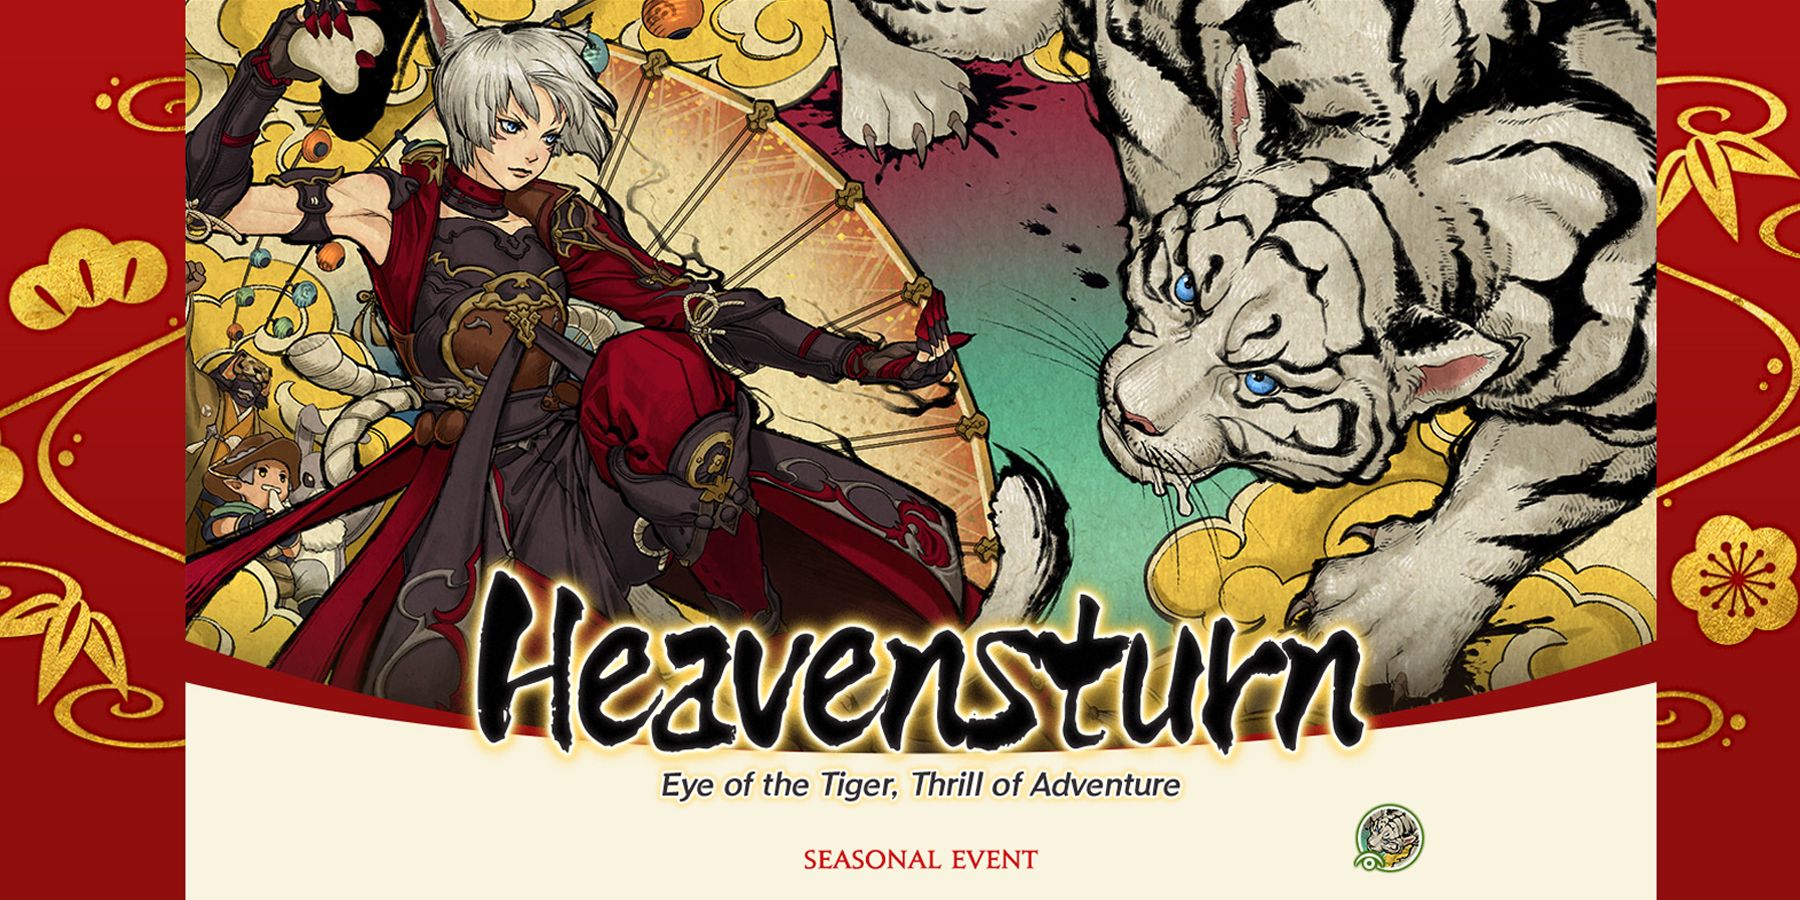 Final Fantasy 14’s ‘As the Heavensturn’ Event Returns